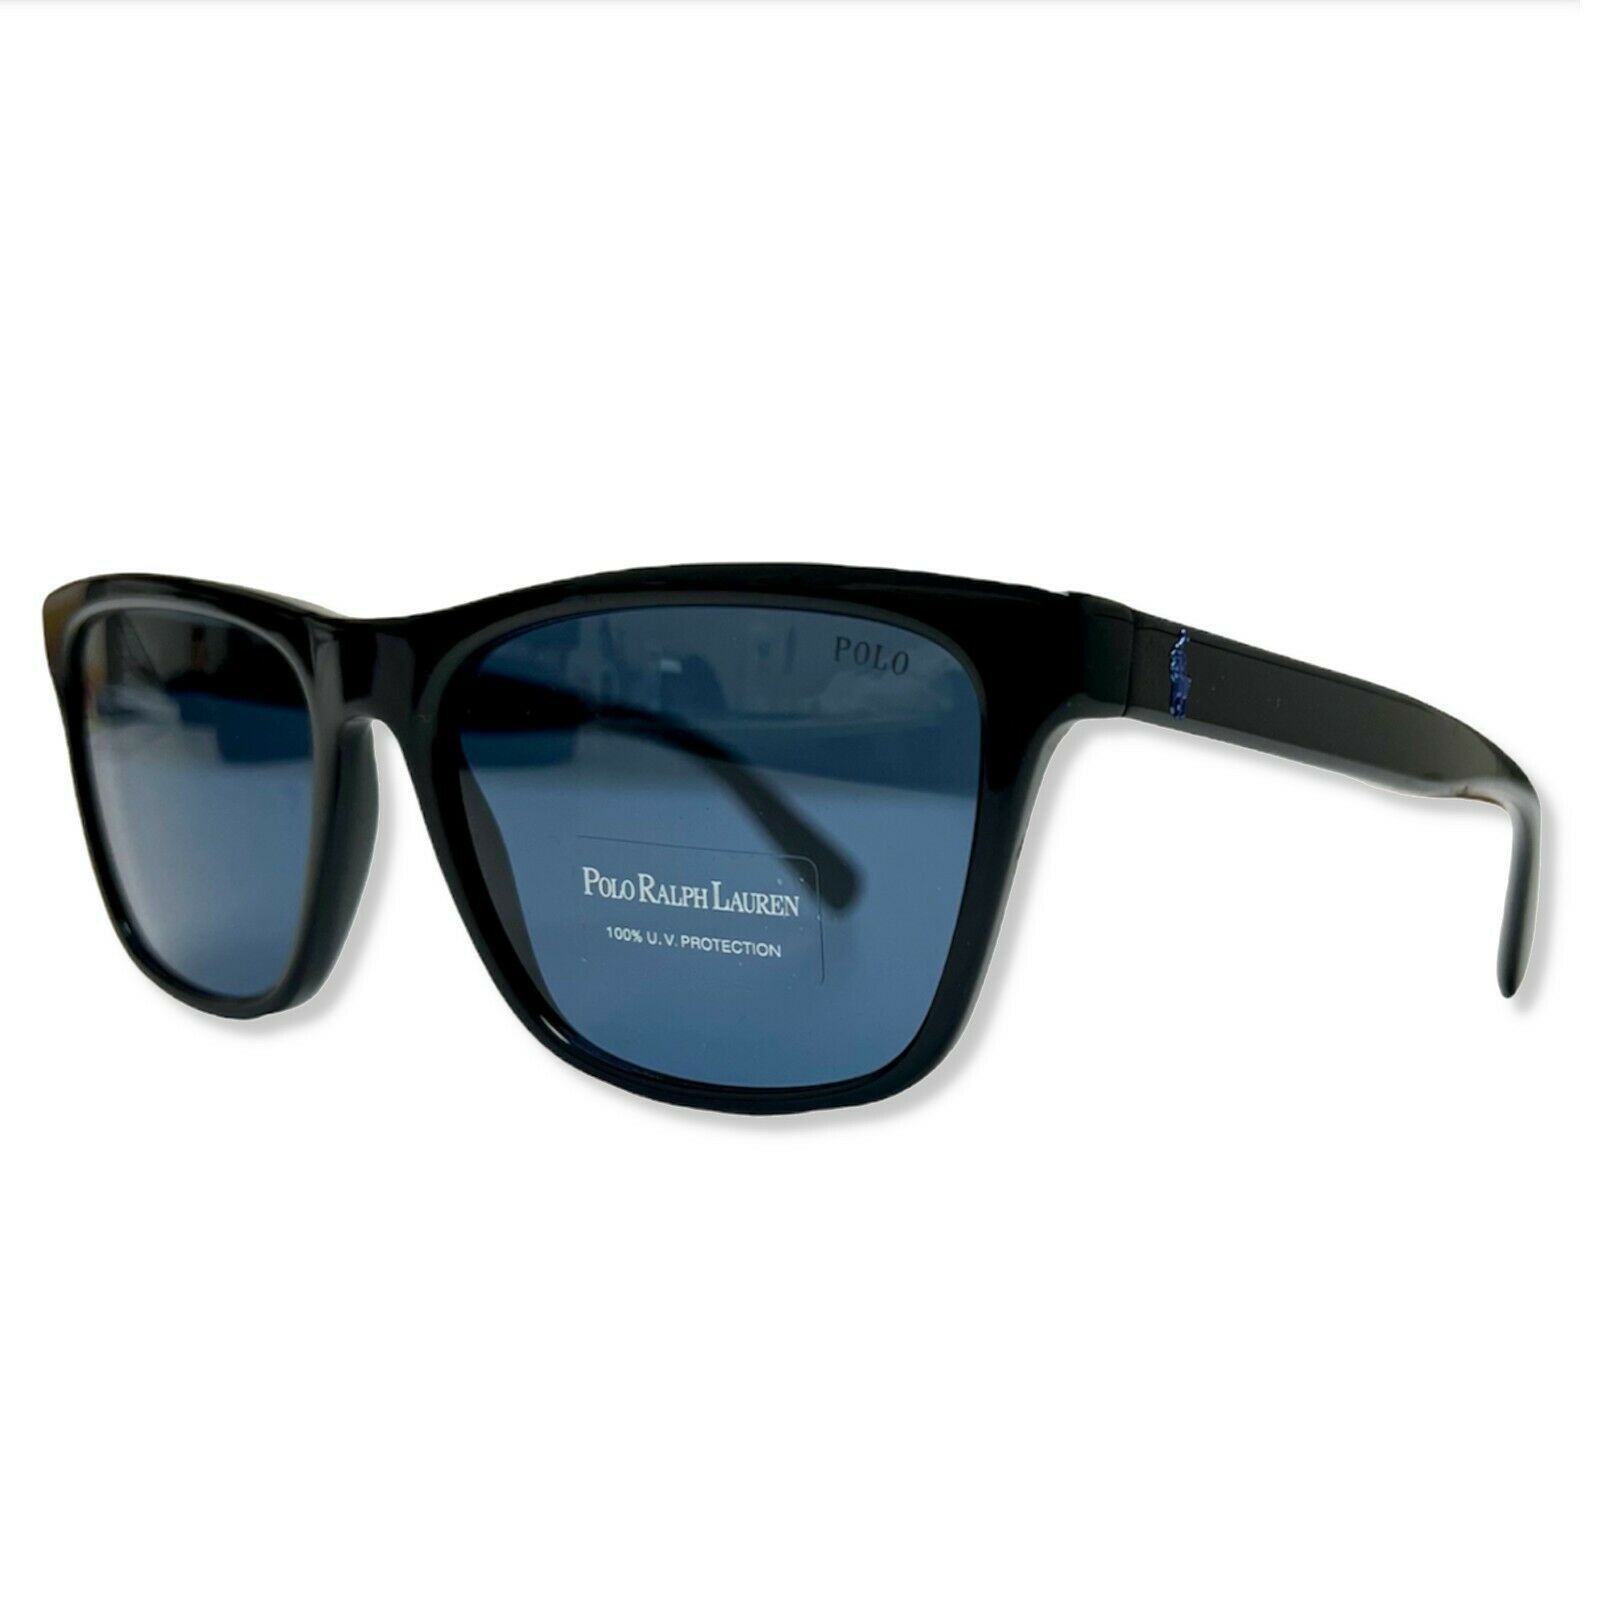 Polo Ralph Lauren Mens Black Dark Blue Sunglasses PH4167 with UV Protection New.